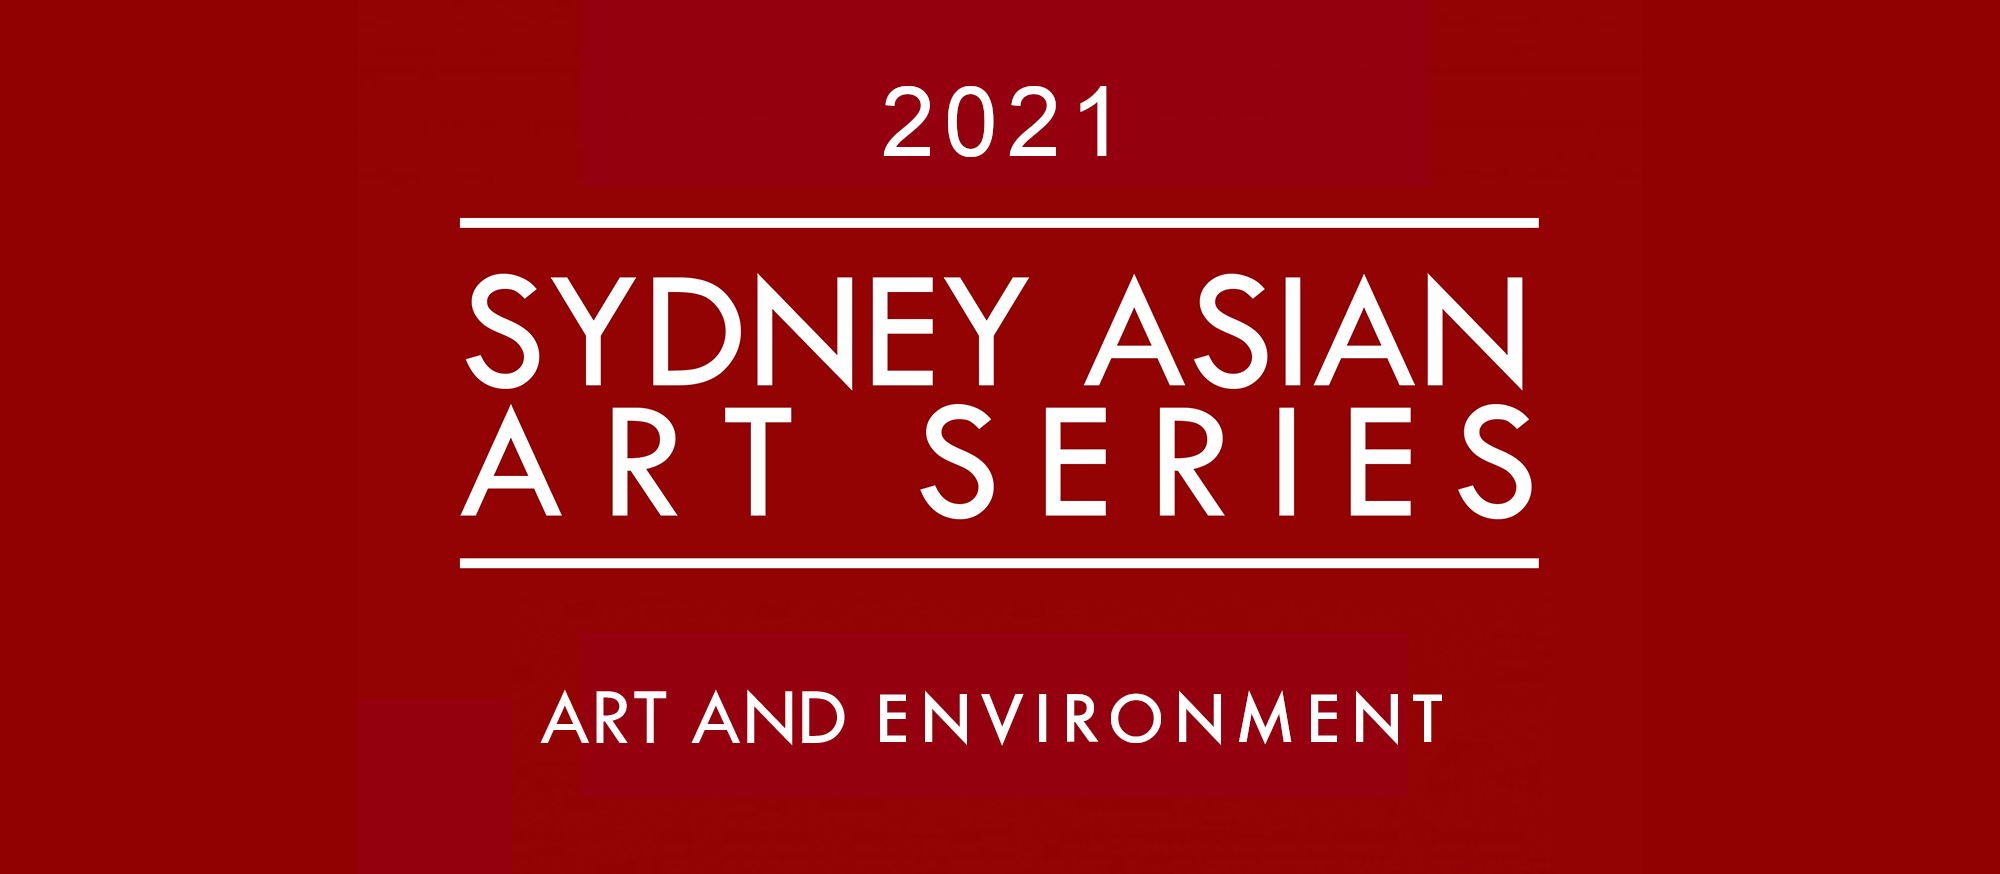 2021 Sydney Asian Art Series: Art and Environment